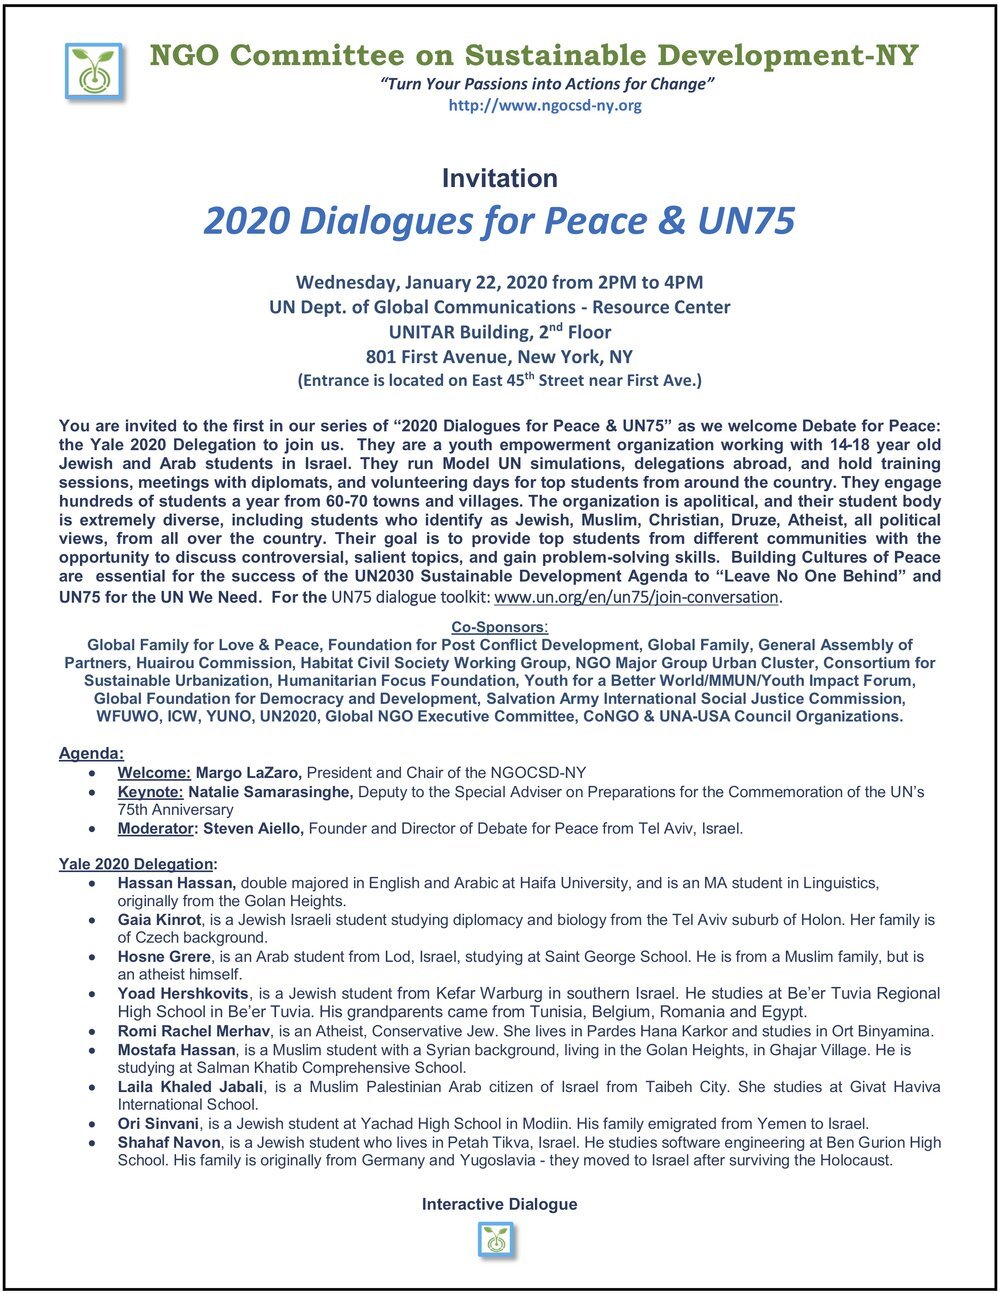 NGOCSD-NY+2020+Dialogues+for+Peace+&+UN75+Invitation+1-22-2020+A3.jpg